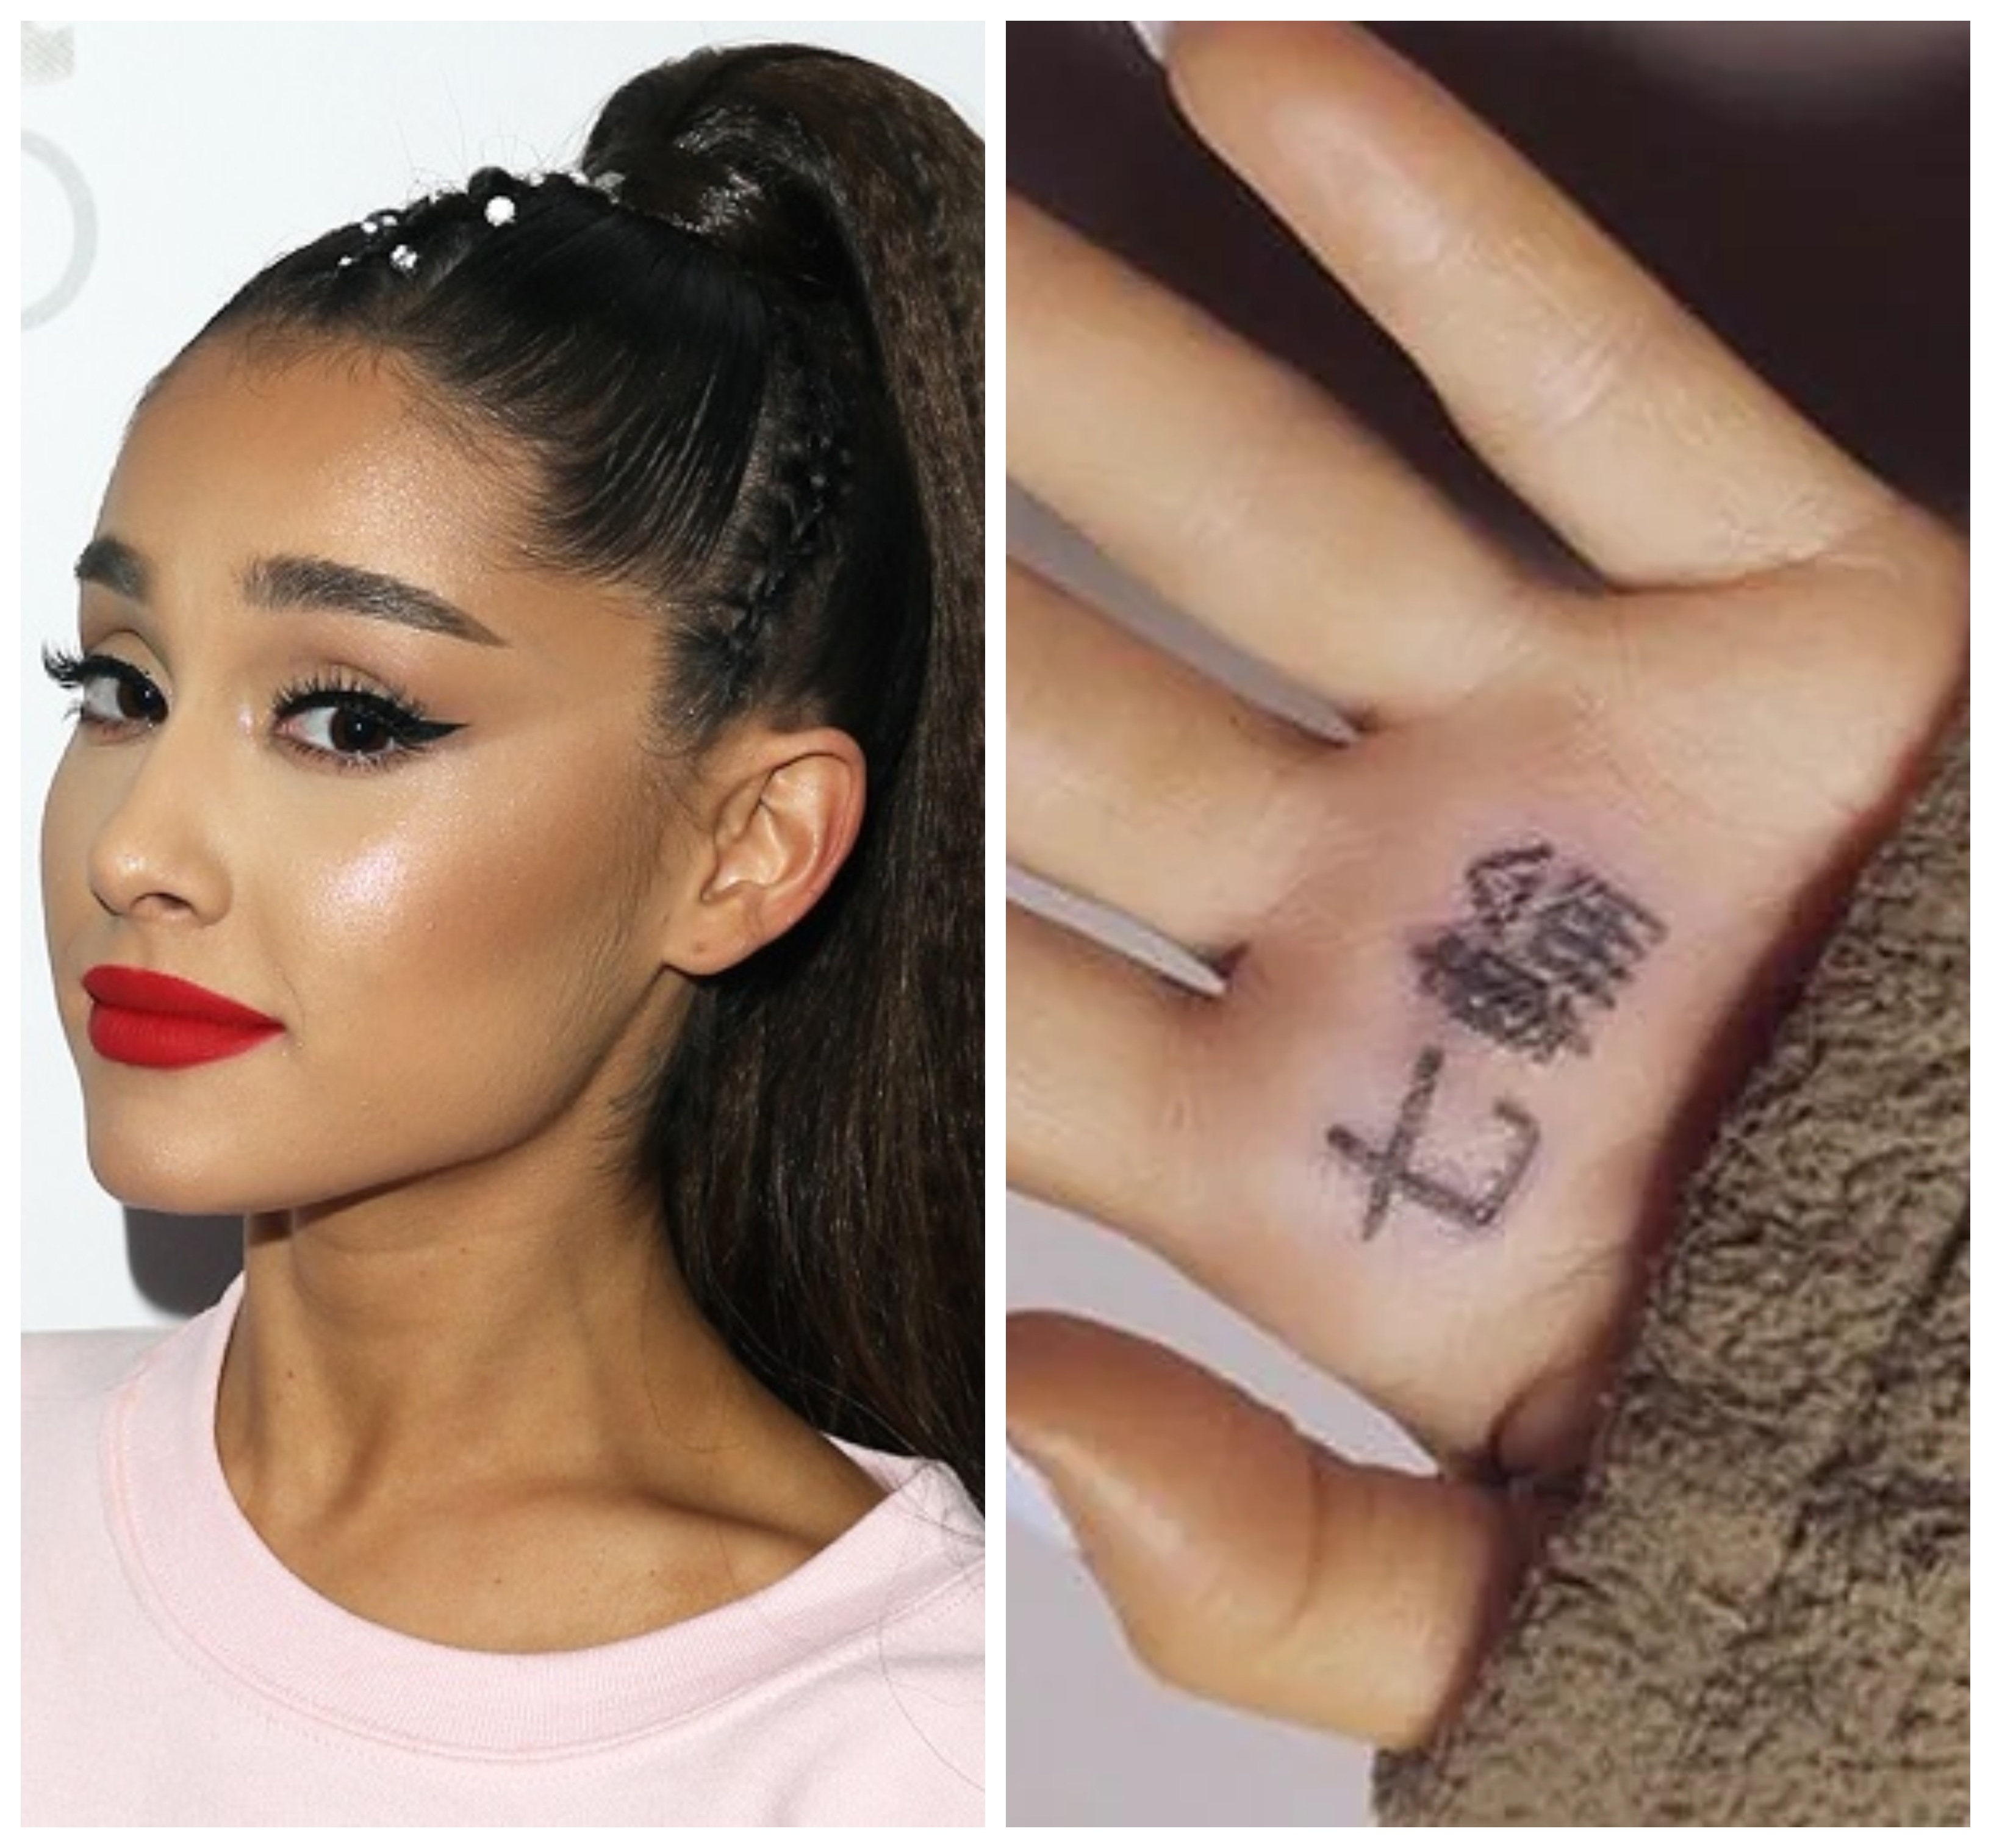 Ariana Grande recibe jugosa oferta por borrar su tatuaje mal hecho -  Potosinoticias.com